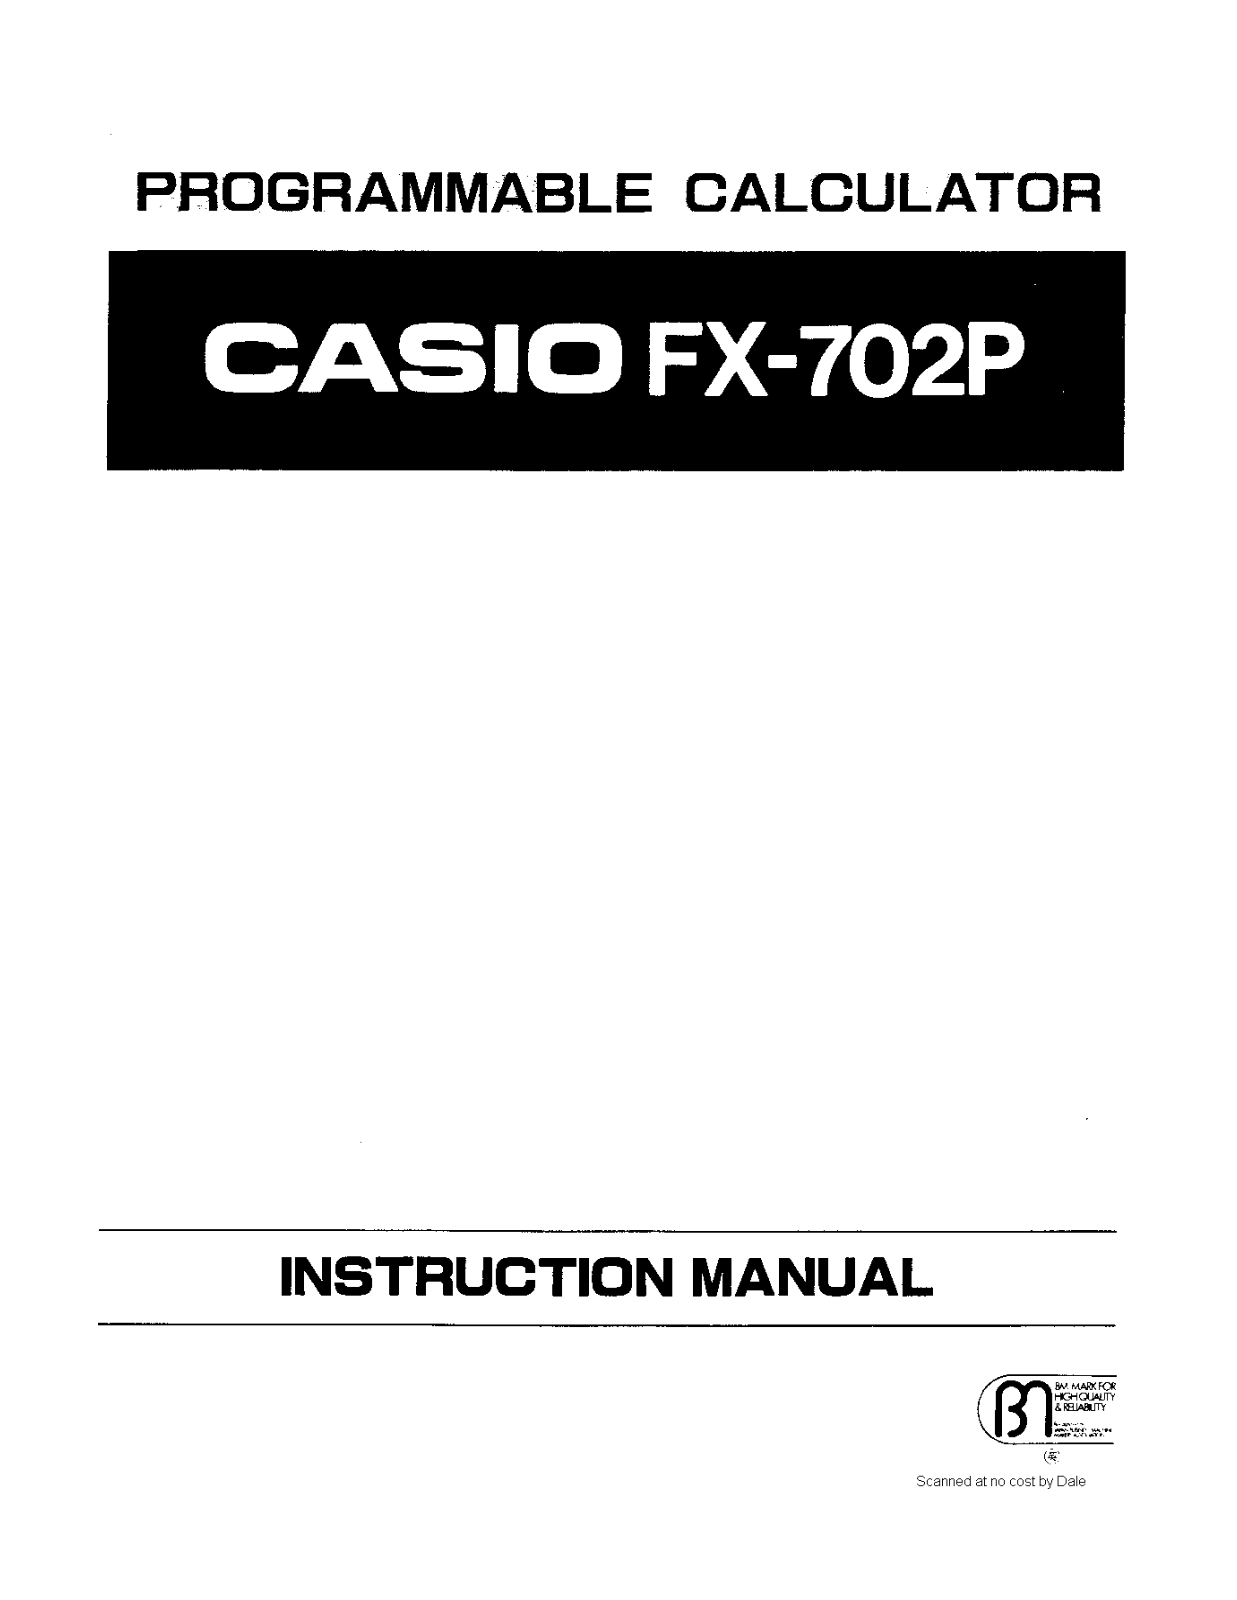 Casio FX-702P Manual